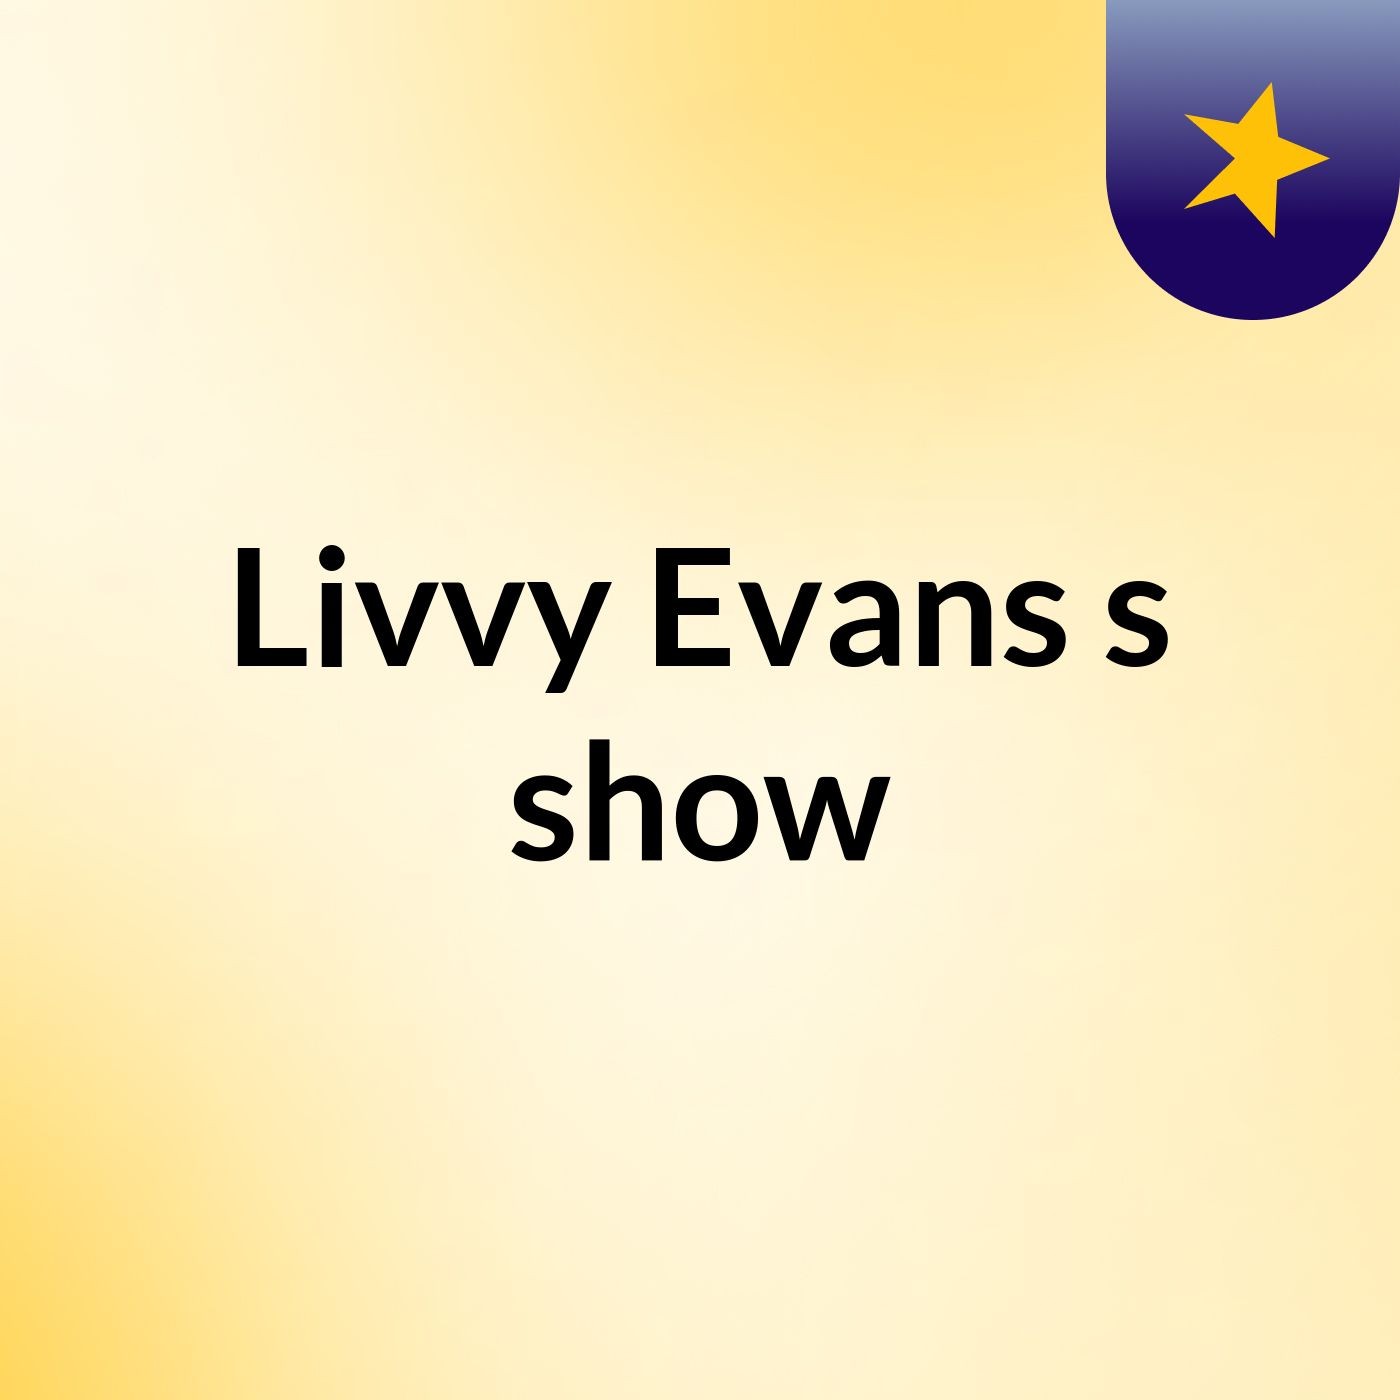 Livvy Evans's show